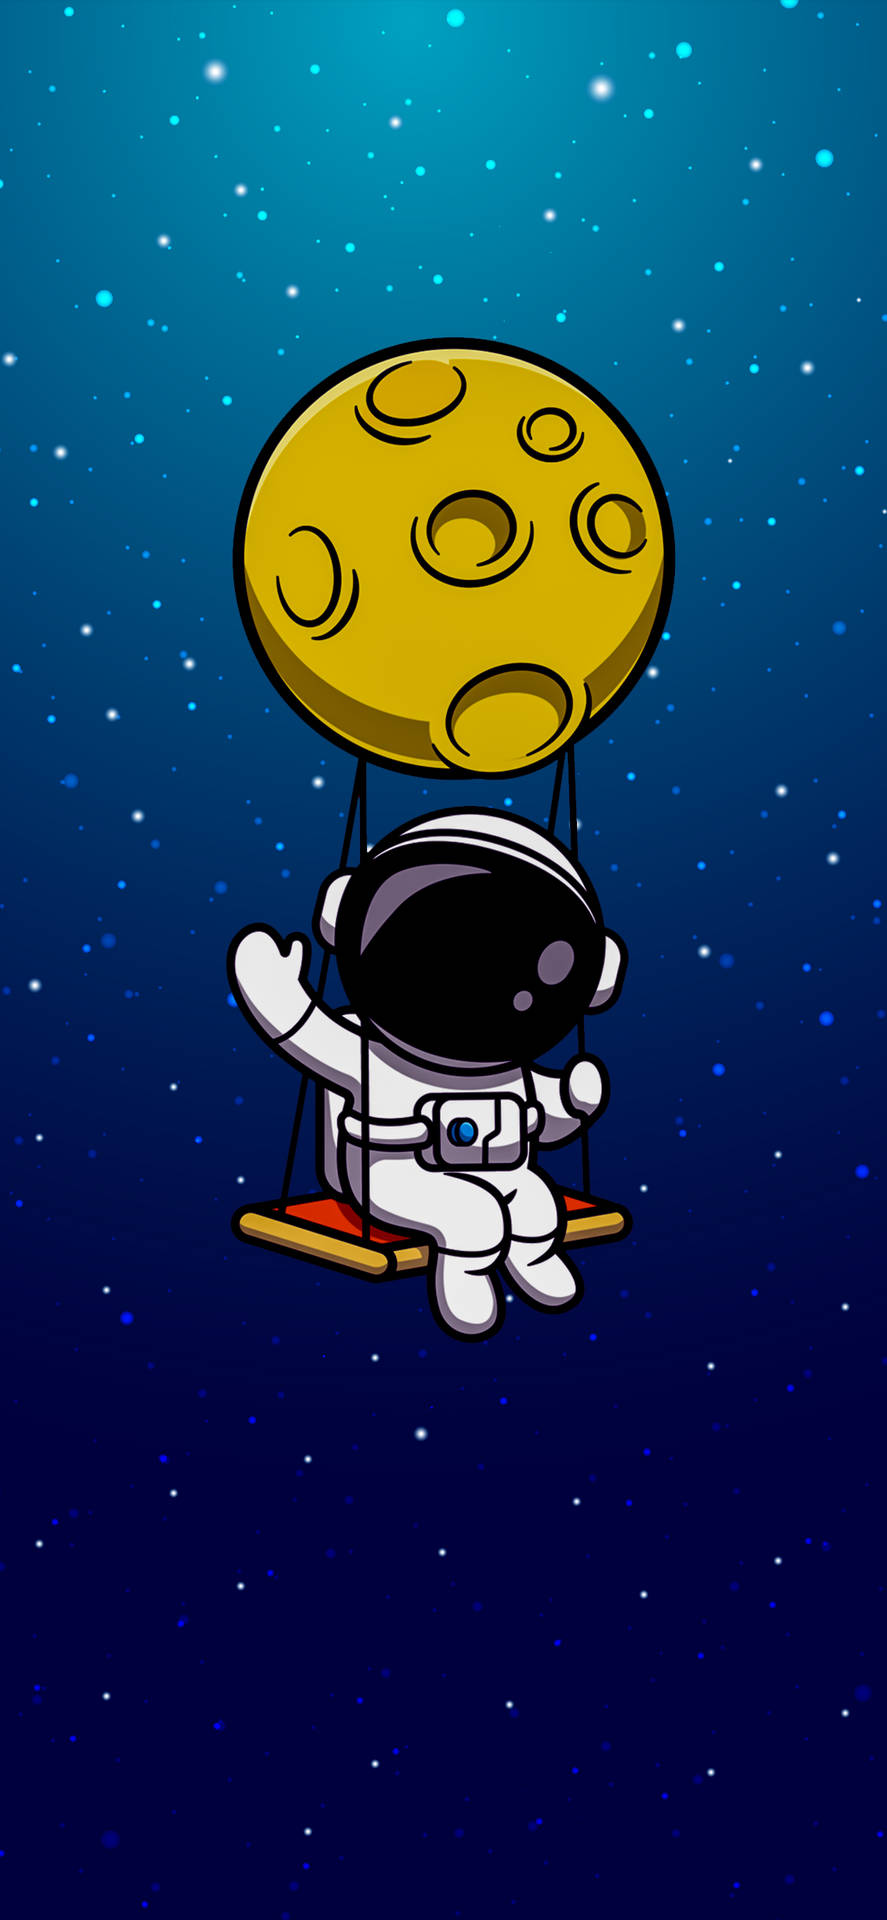 Cartoon Astronaut On A Swing